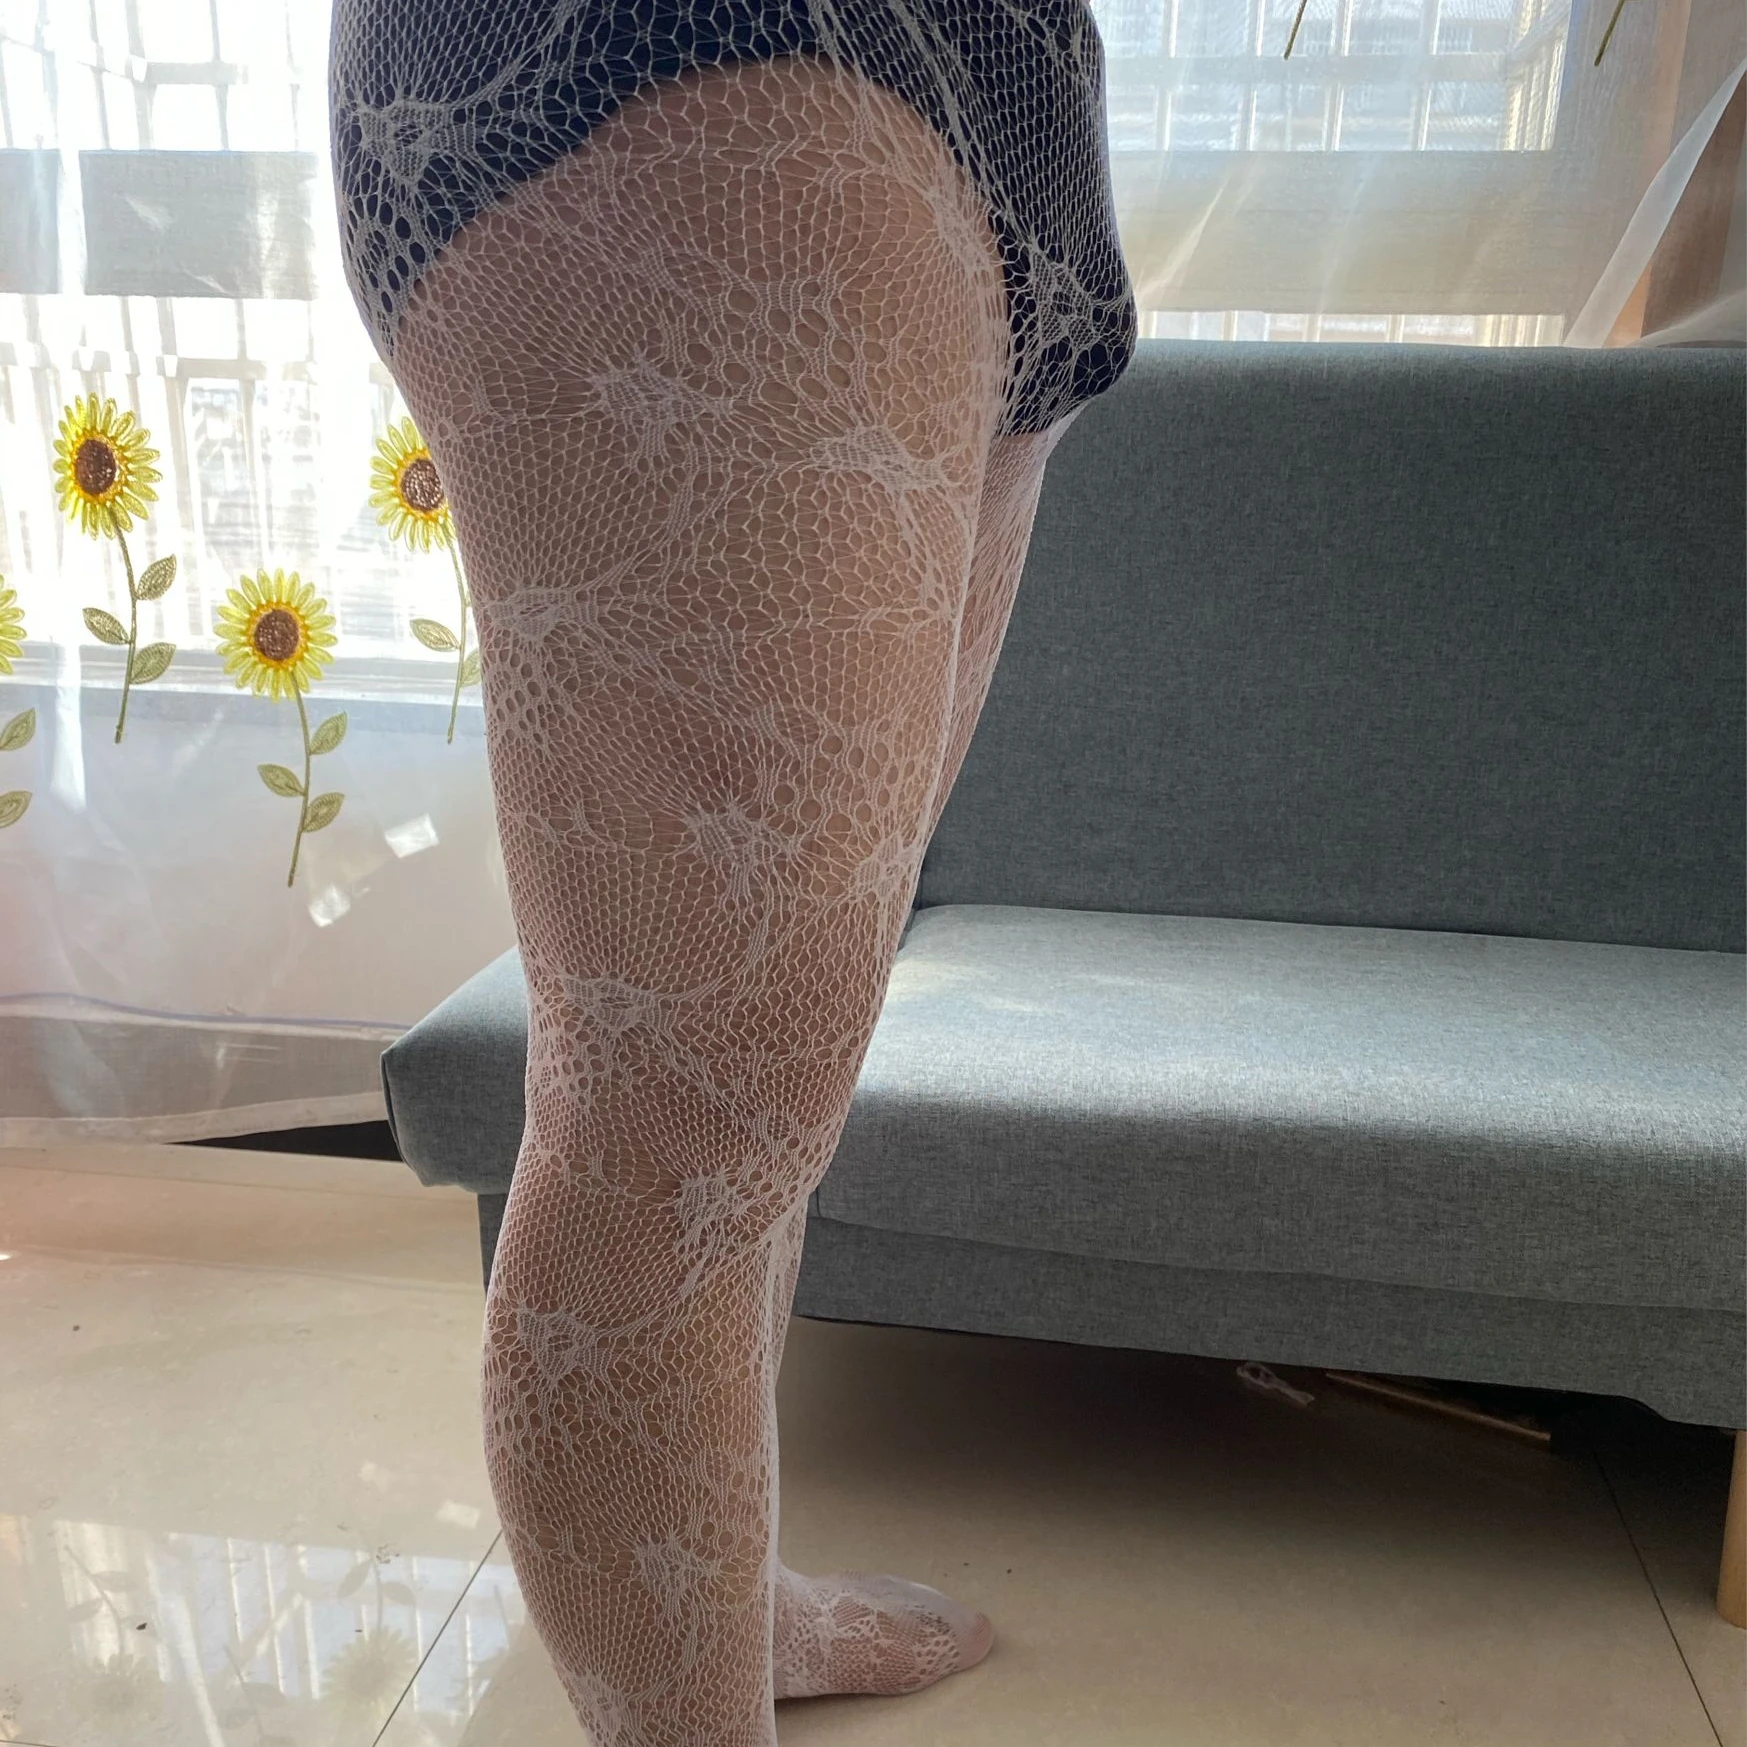 Plus Size Lingerie Men's Tights Sexy Male Underwear 2021 Hot Sale Fishnet Transparent White Pantyhose for Husband Boyfriend Gift hosiery socks